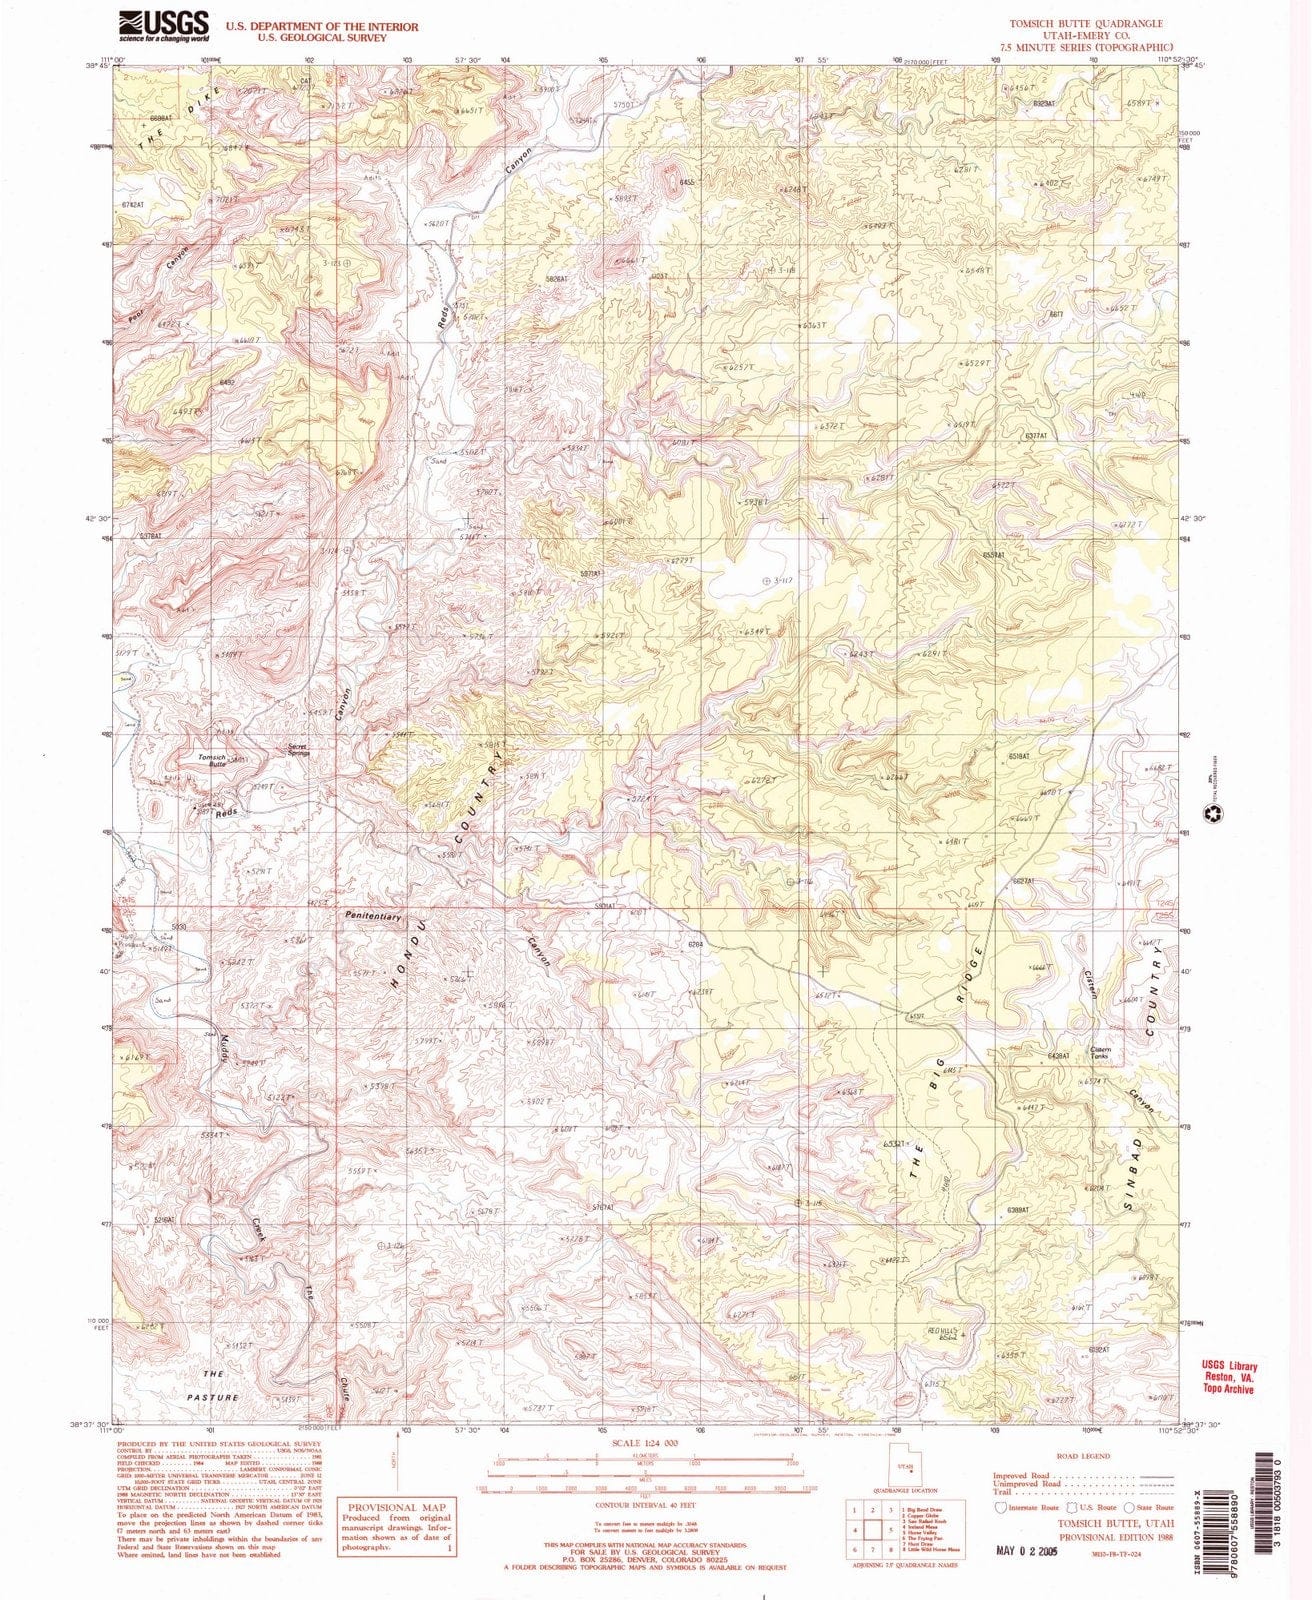 1988 Tomsich Butte, UT - Utah - USGS Topographic Map